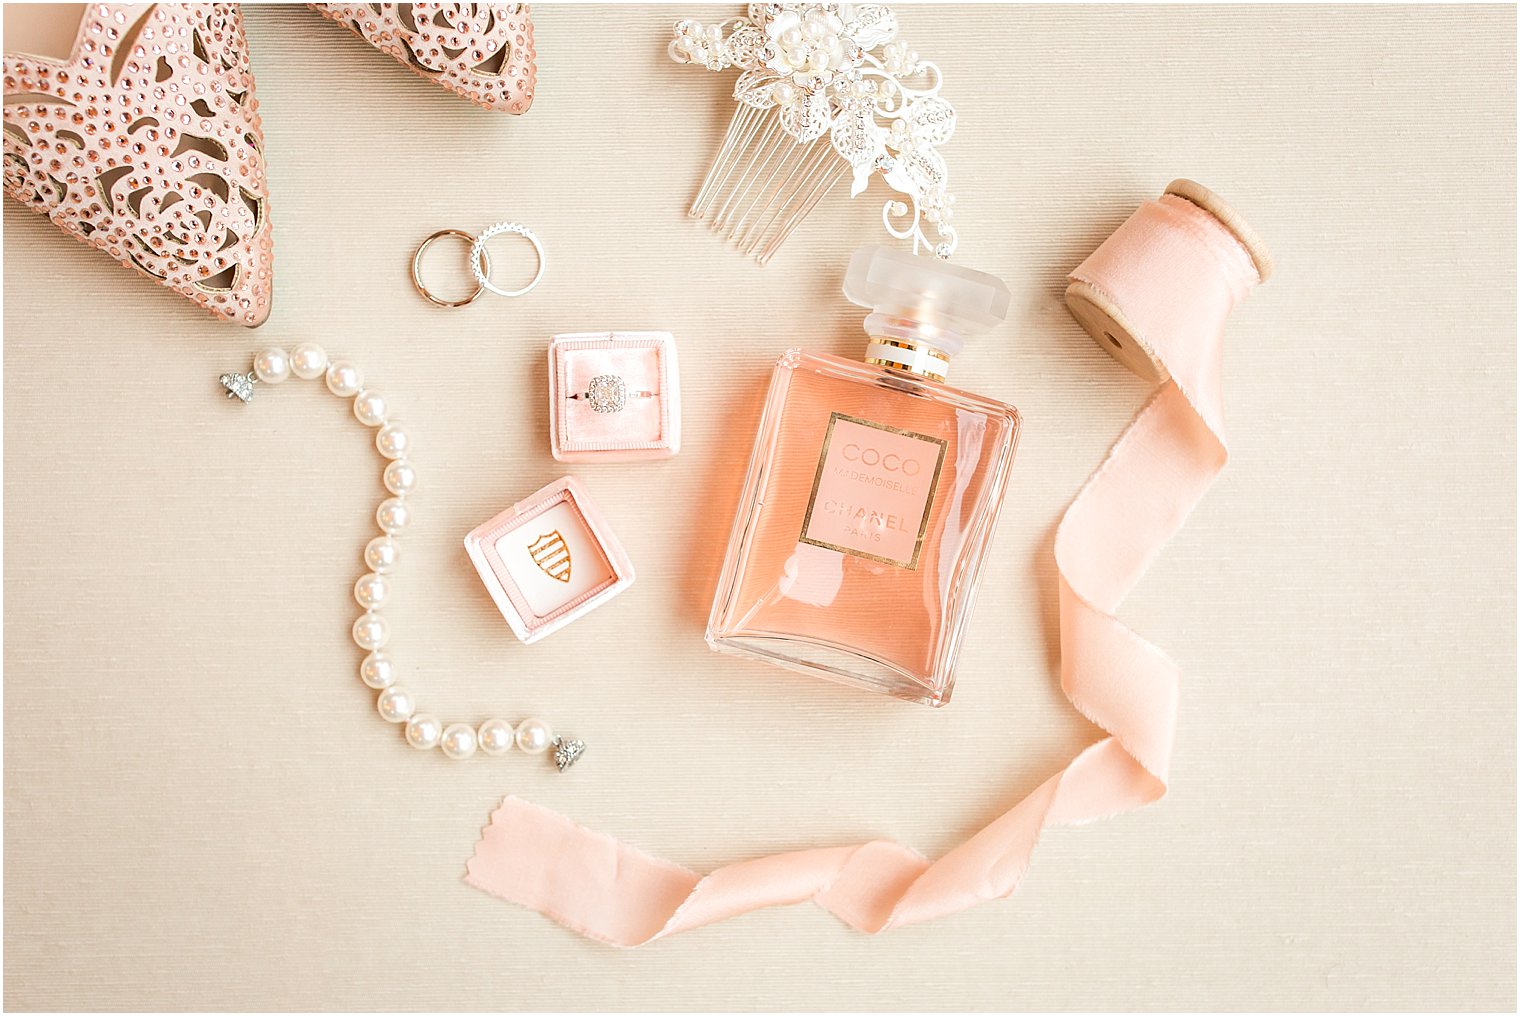 Chanel perfume and pretty wedding details | Photo by Idalia Photography